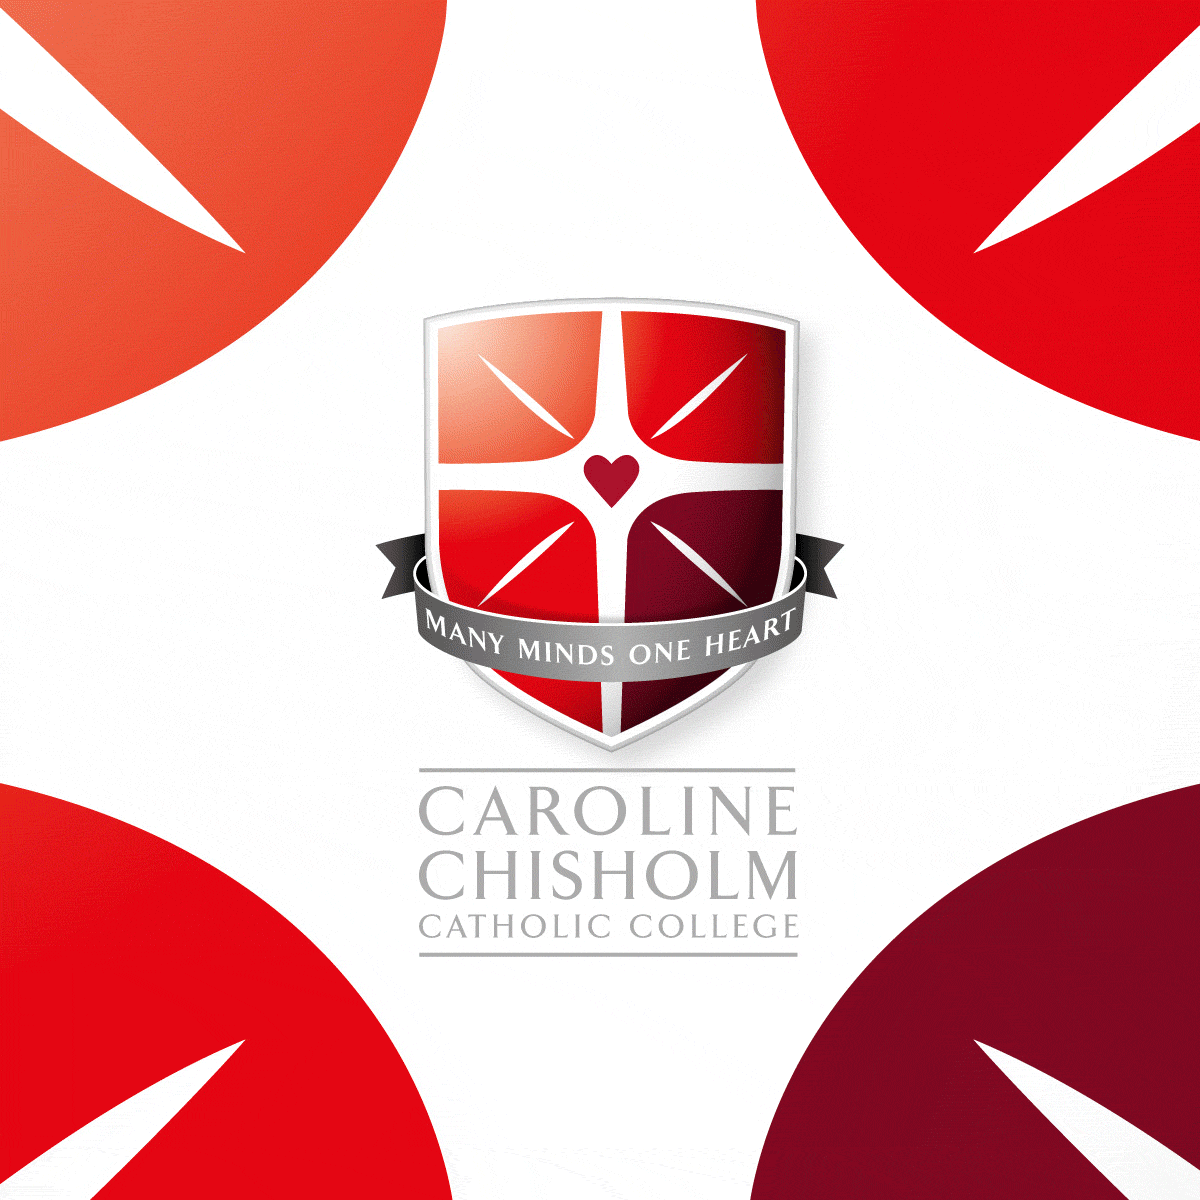 Caroline Chisholm Catholic College Brand Identity